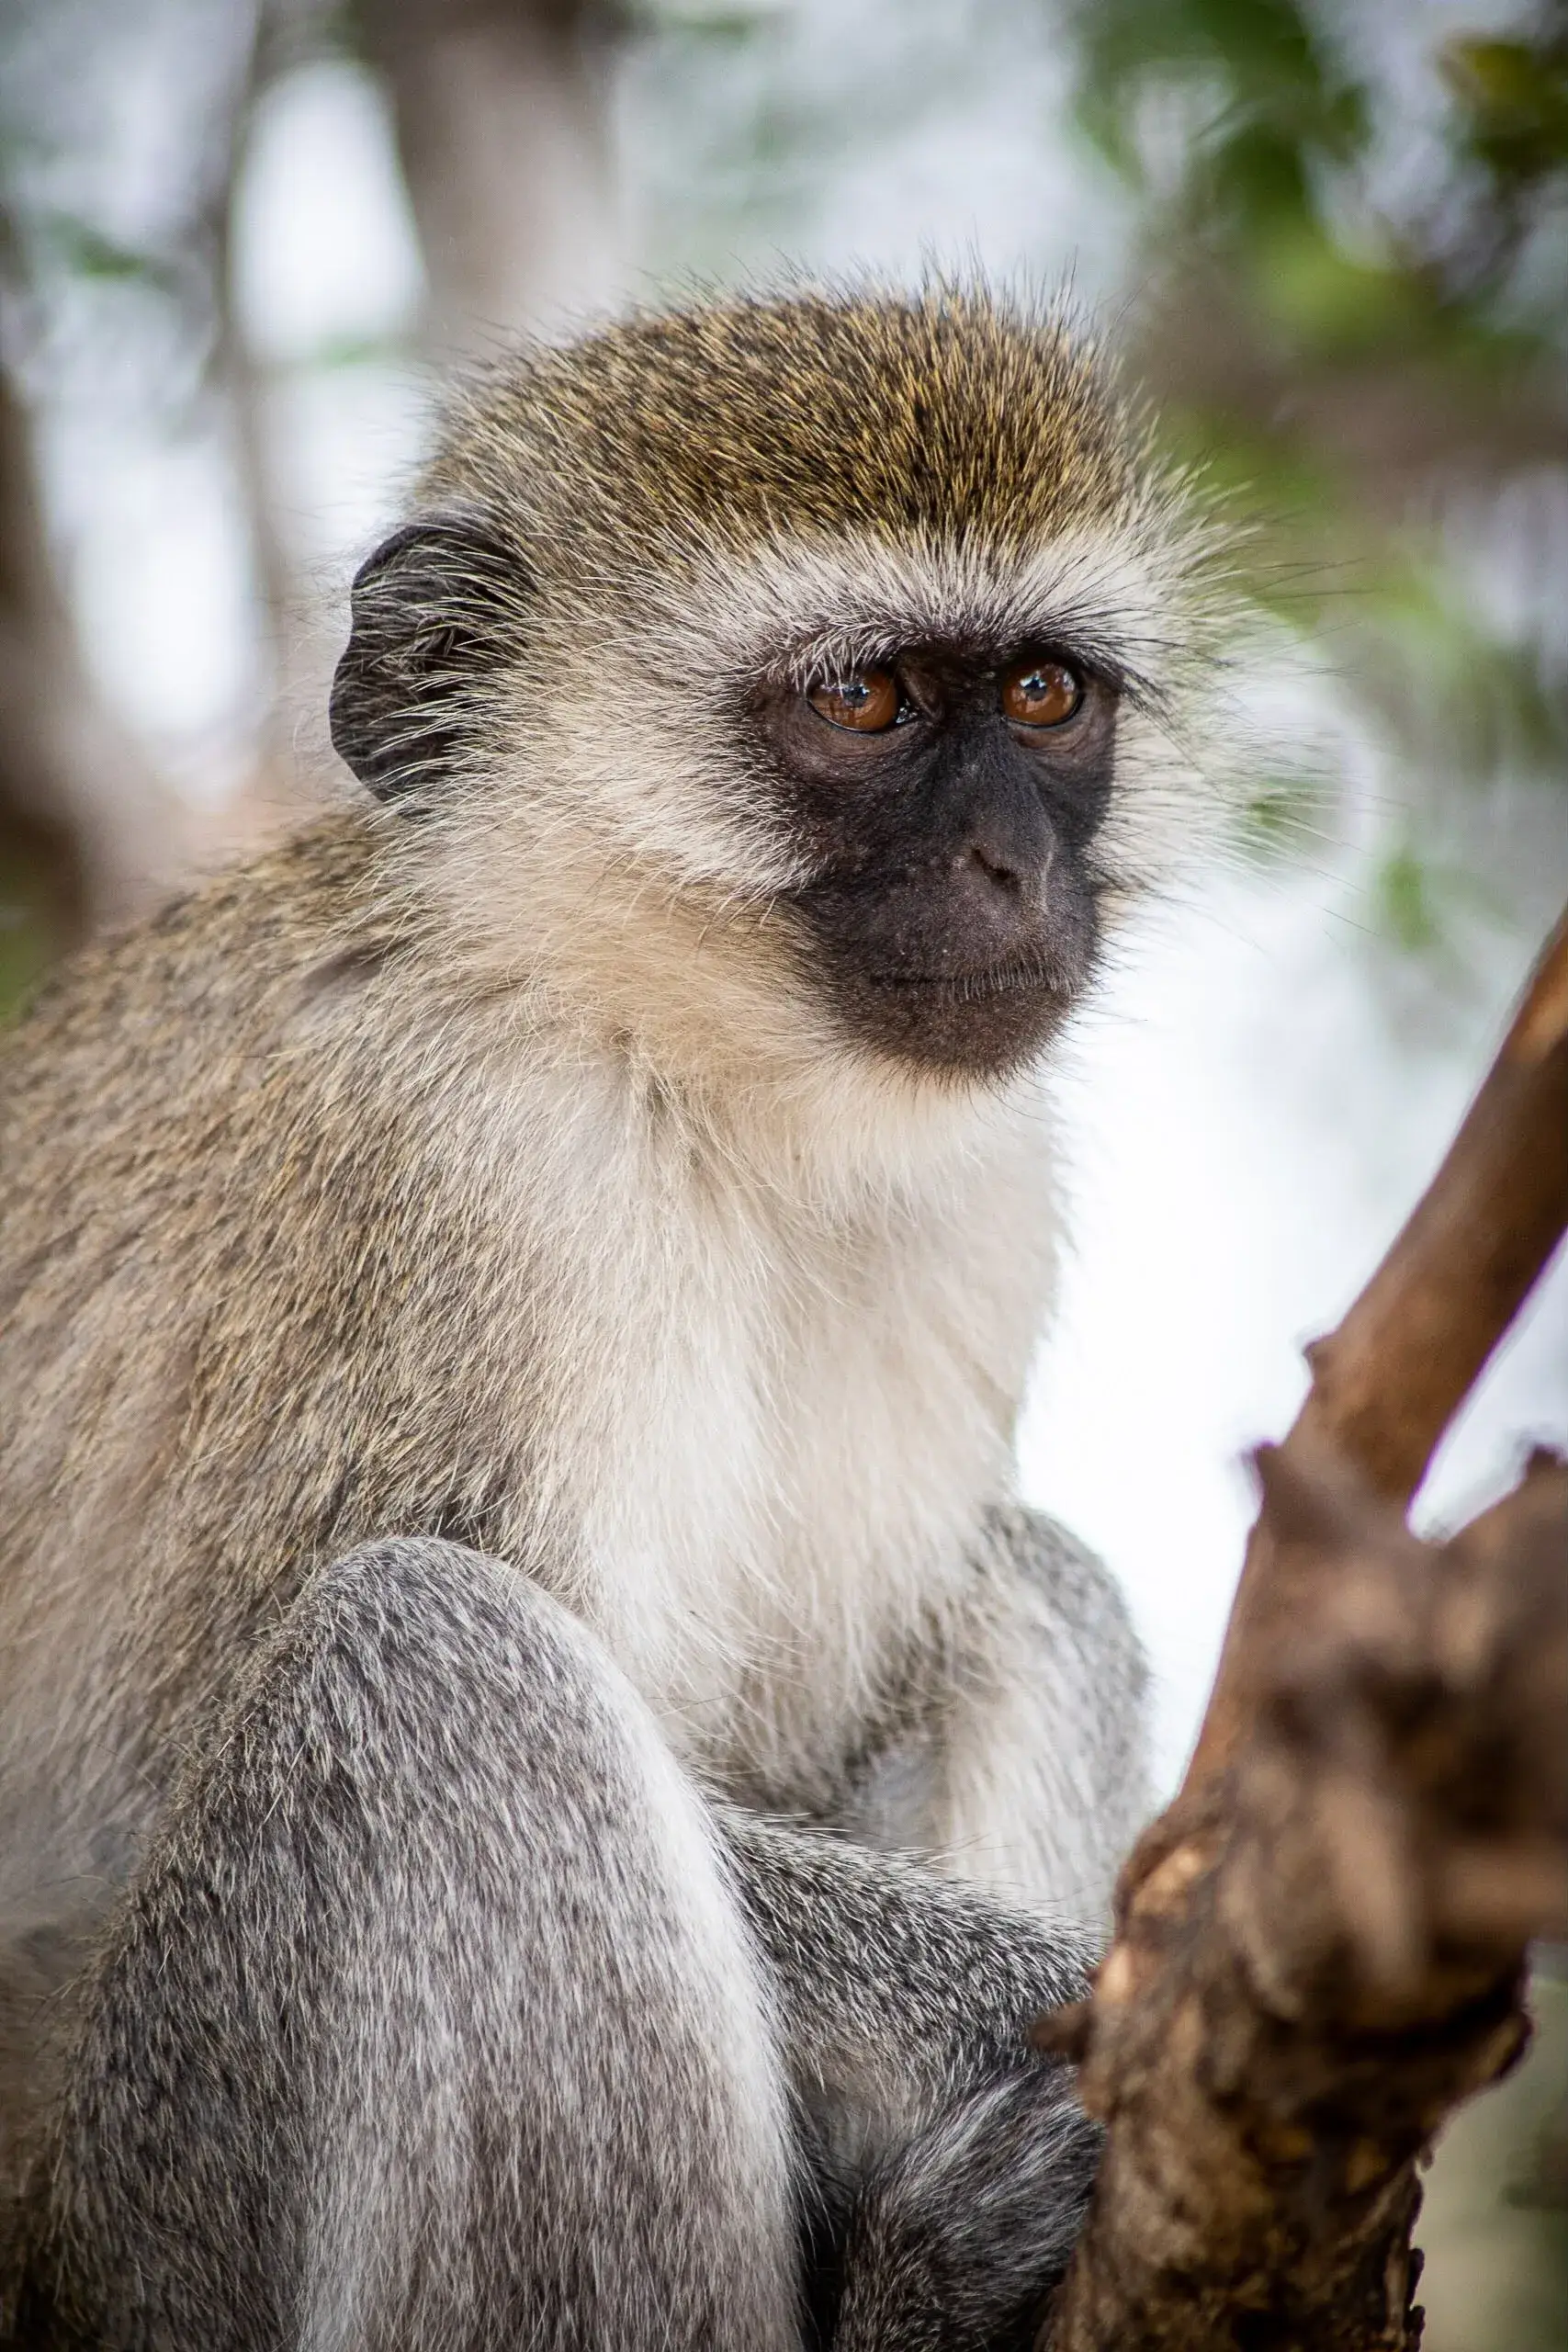 Vervet monkey spotted while Kilimanjaro trekking